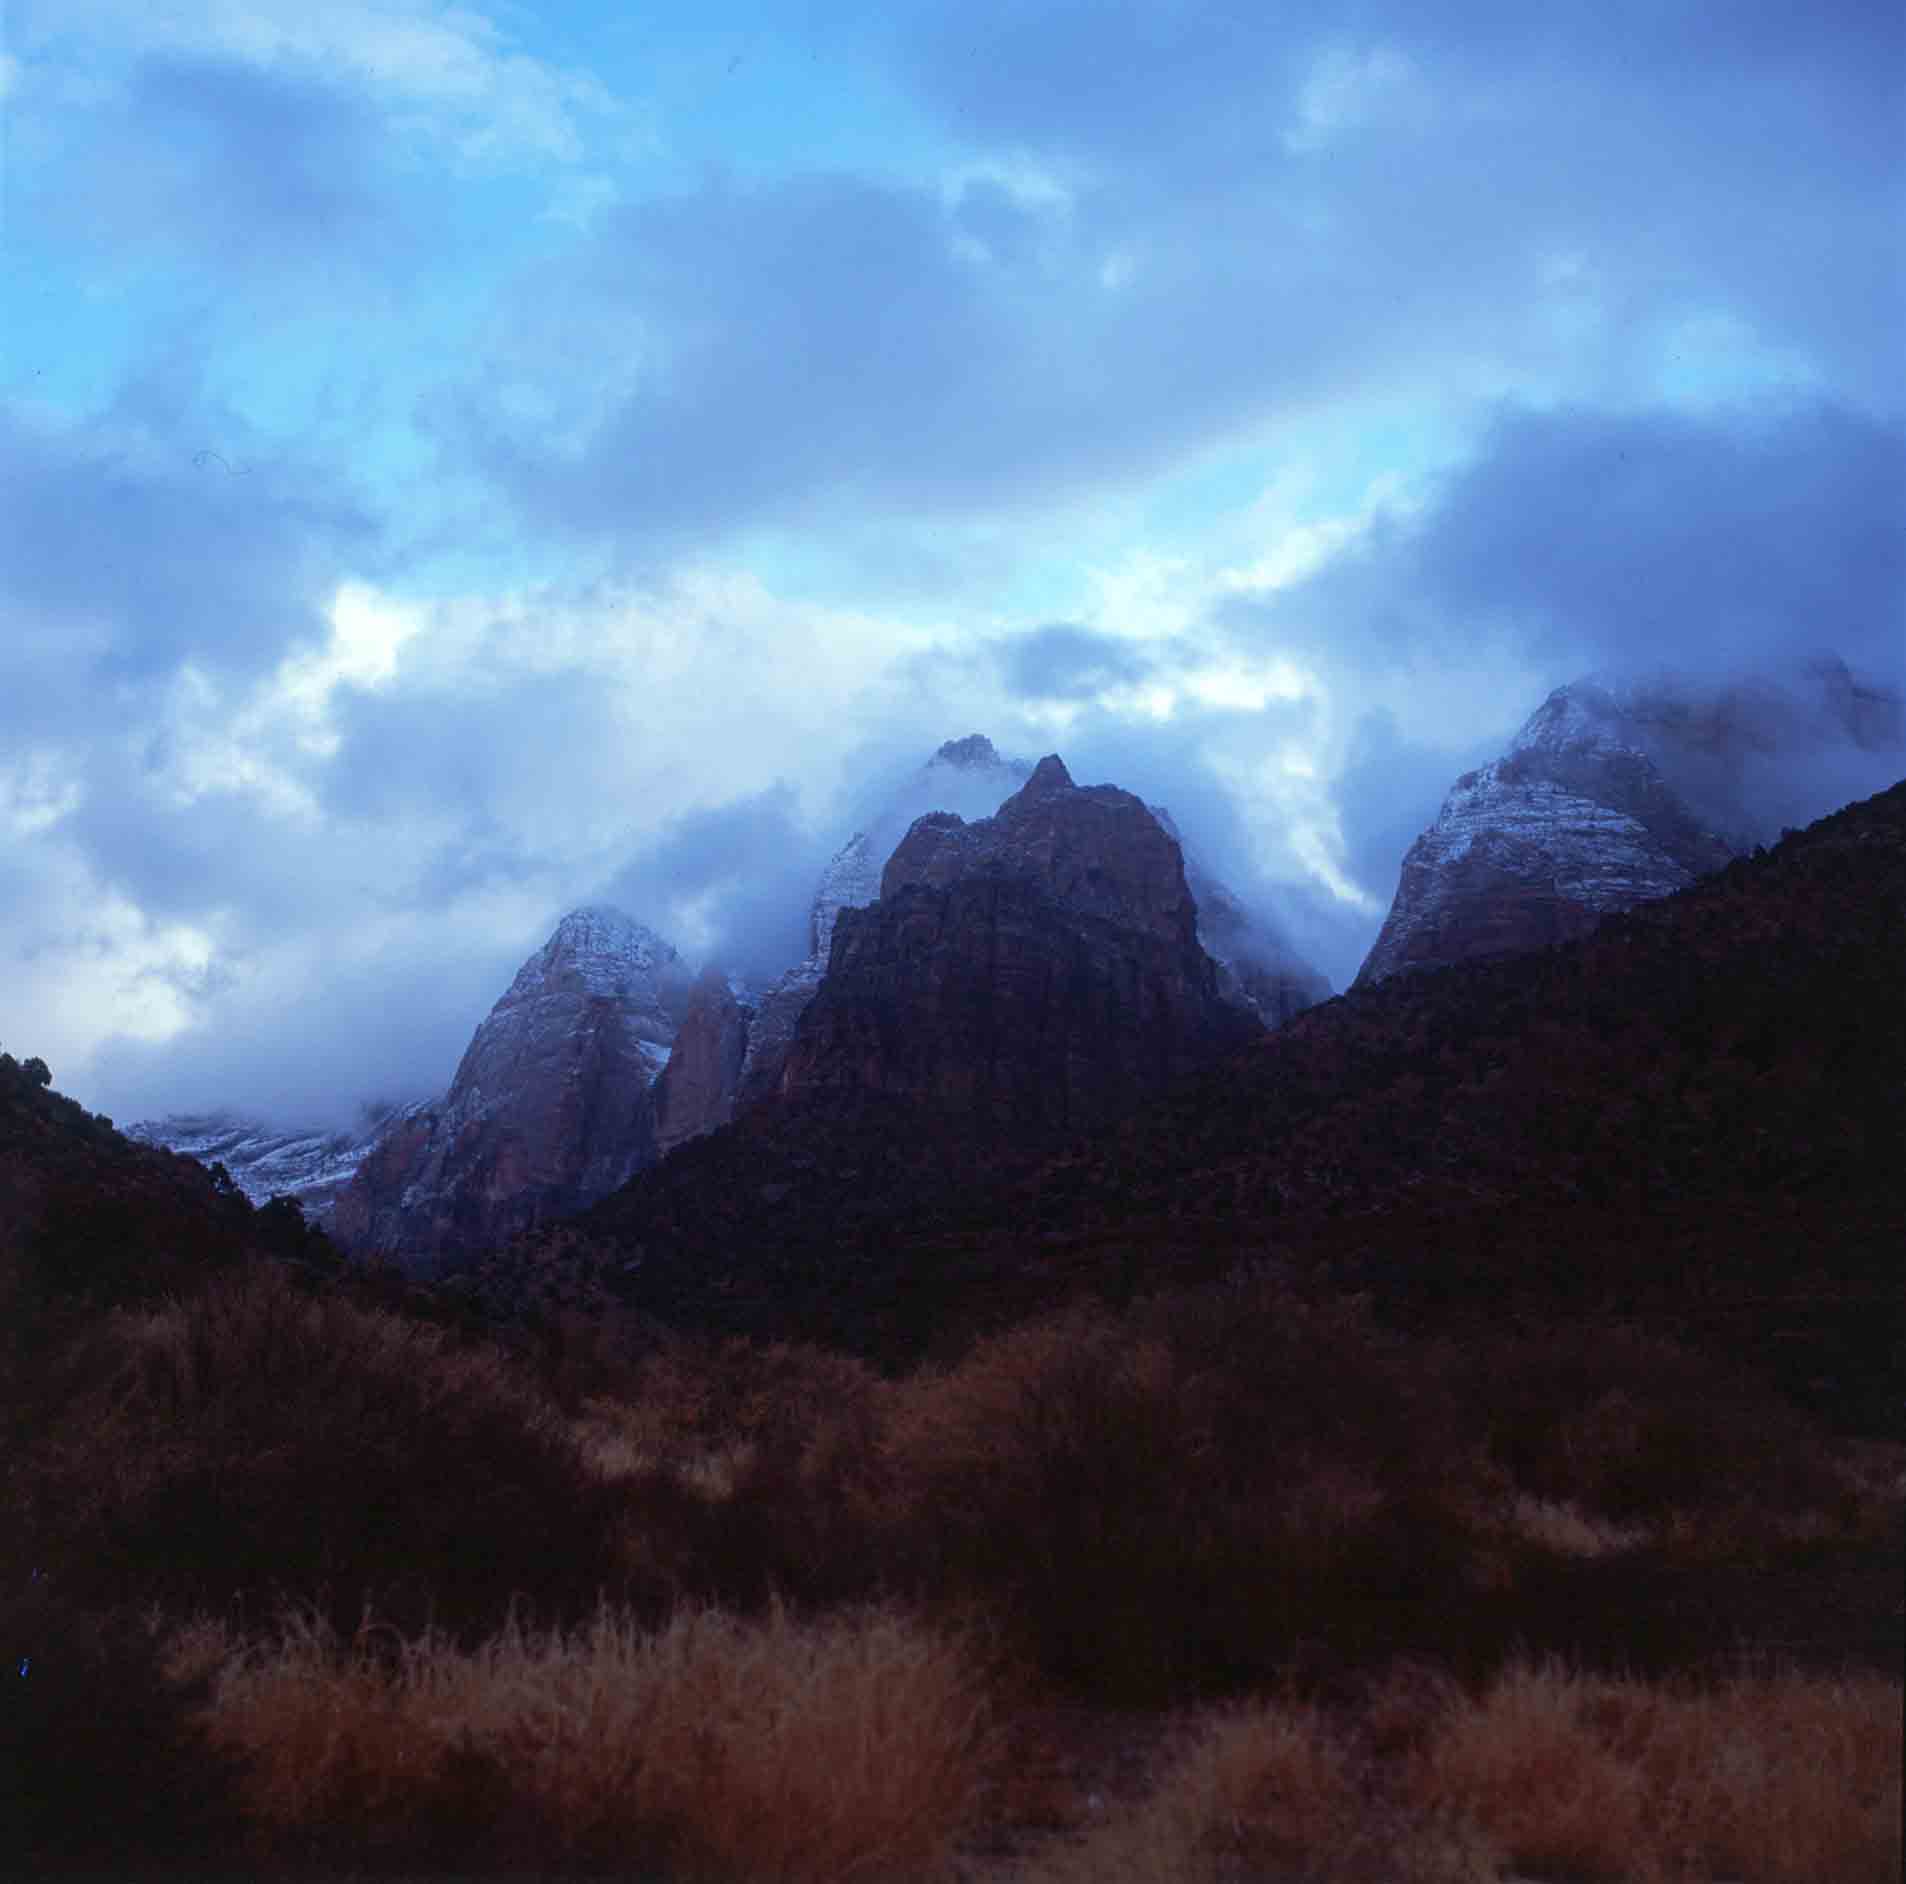 Zion National Park, UtahFujichrome Velvia 100 Medium Format Film